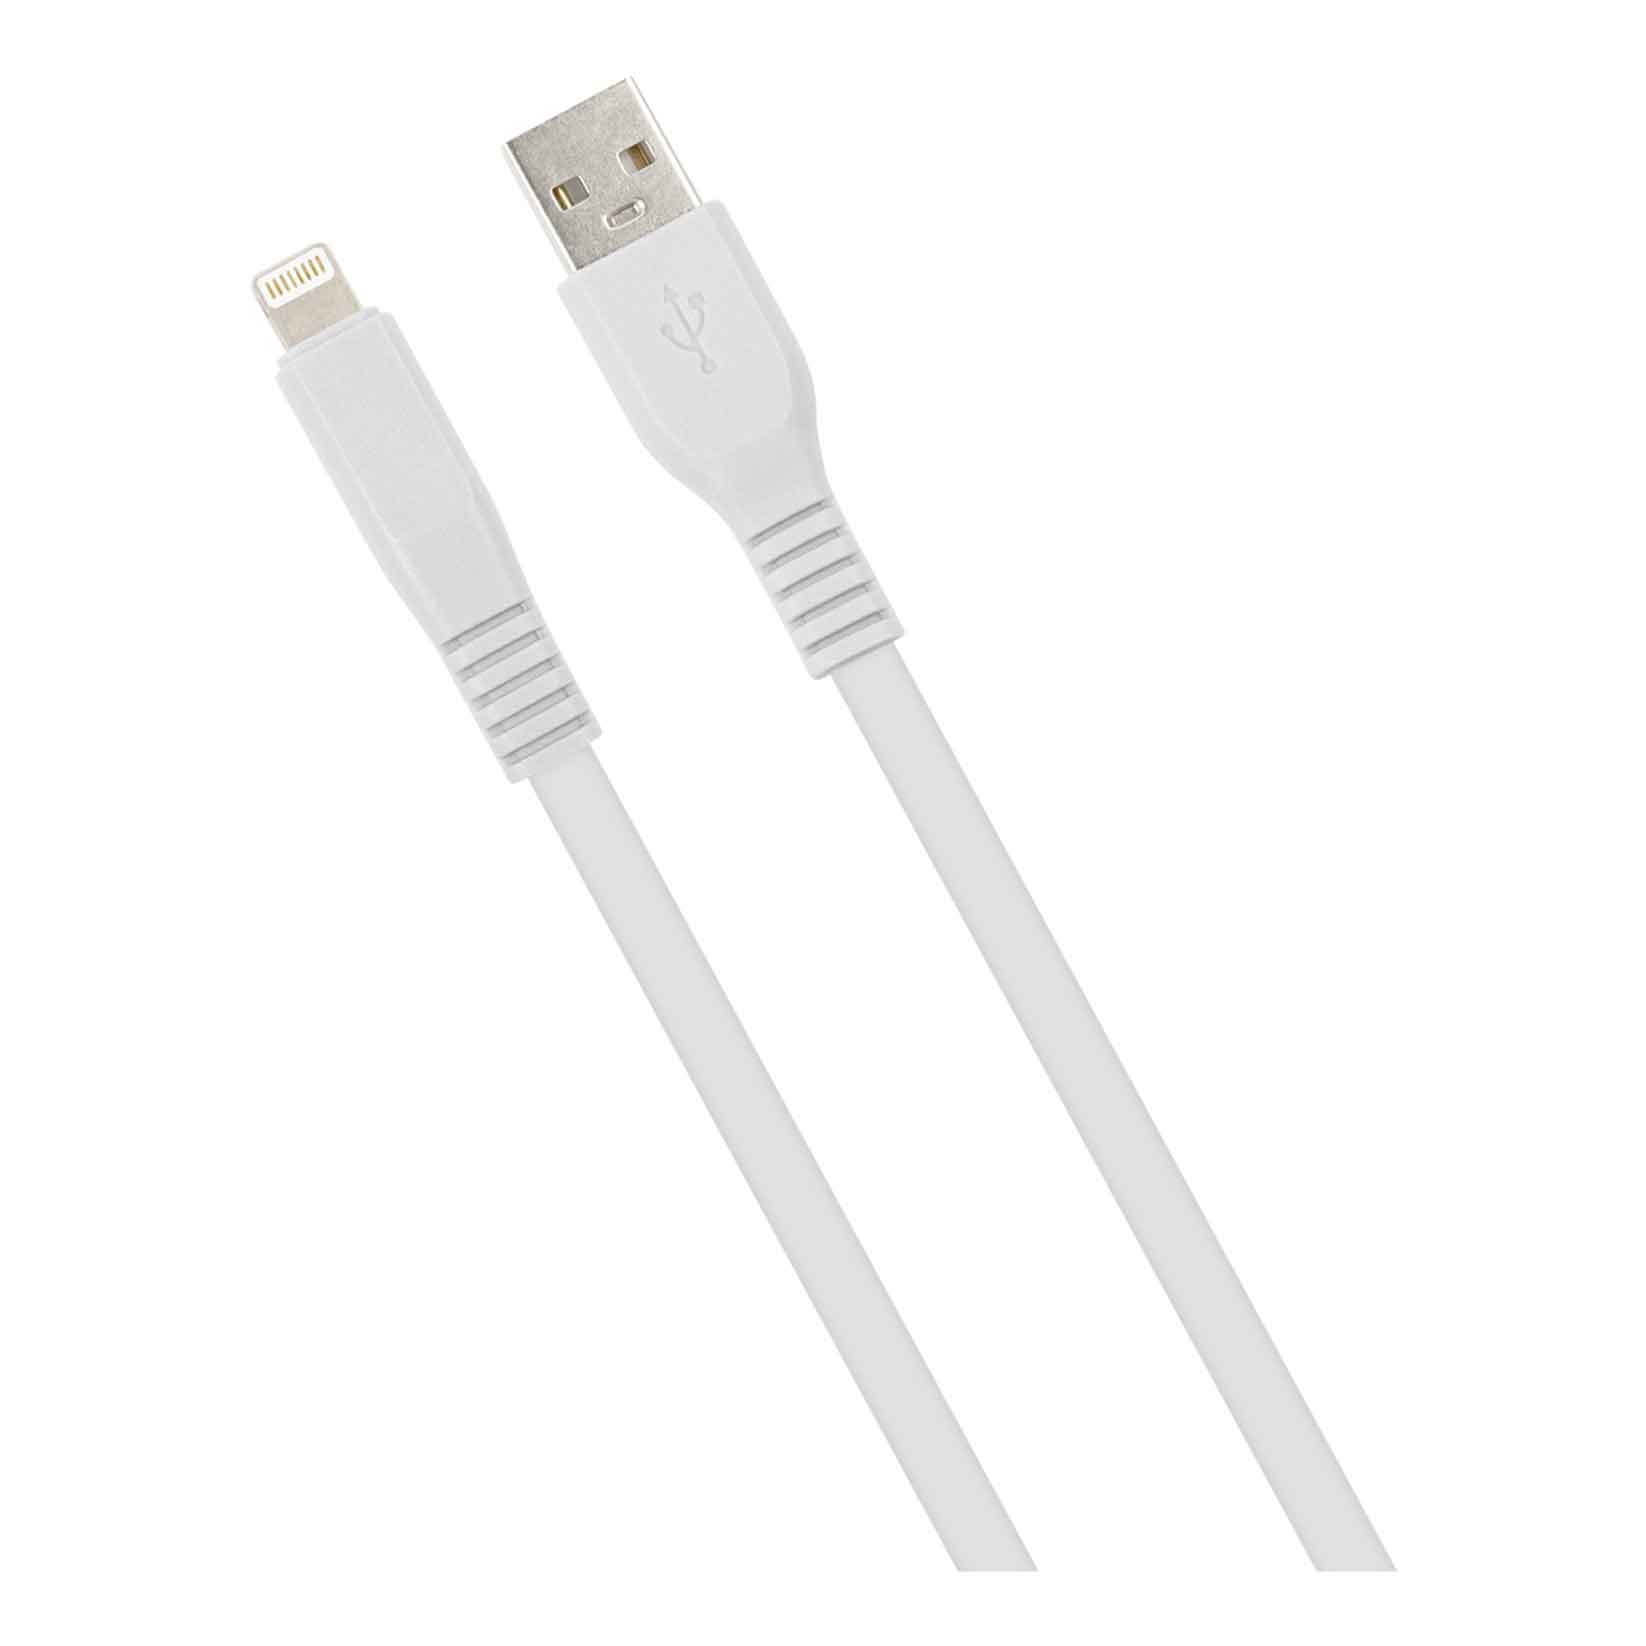 Дата-кабель MB mObility USB - LIGHTNING (8 PIN), плоский, 2 метра, 3А,белый УТ000027533